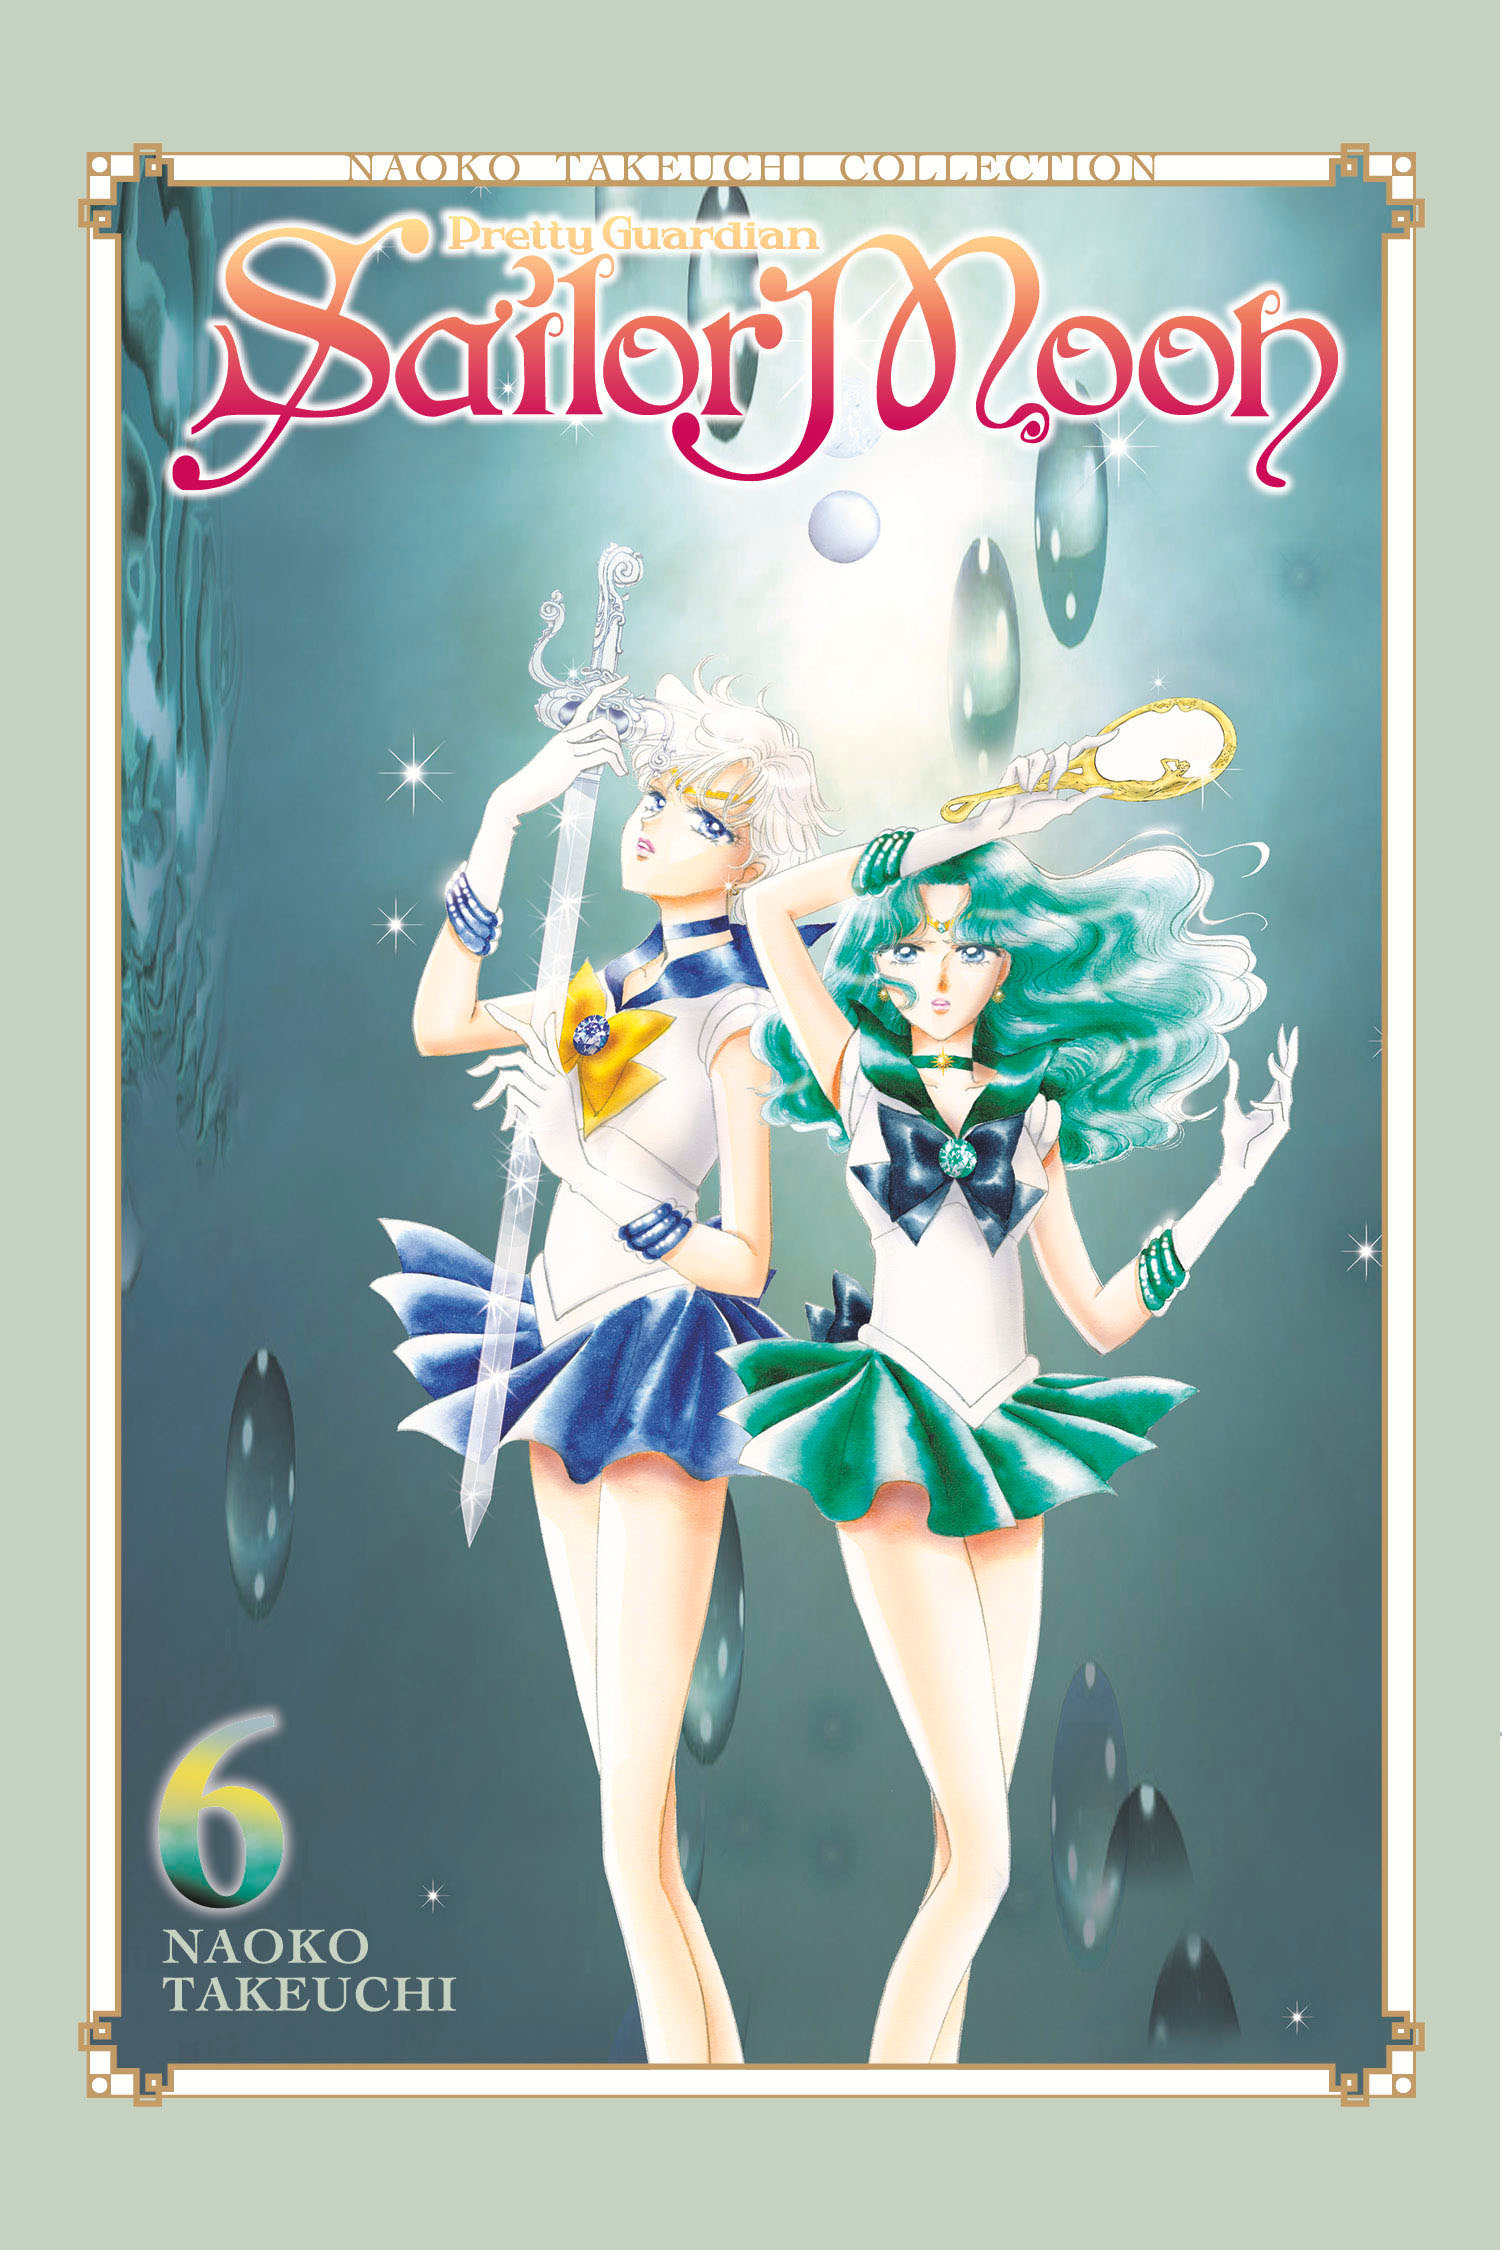 Sailor Moon Naoko Takeuchi Collection Volume 6